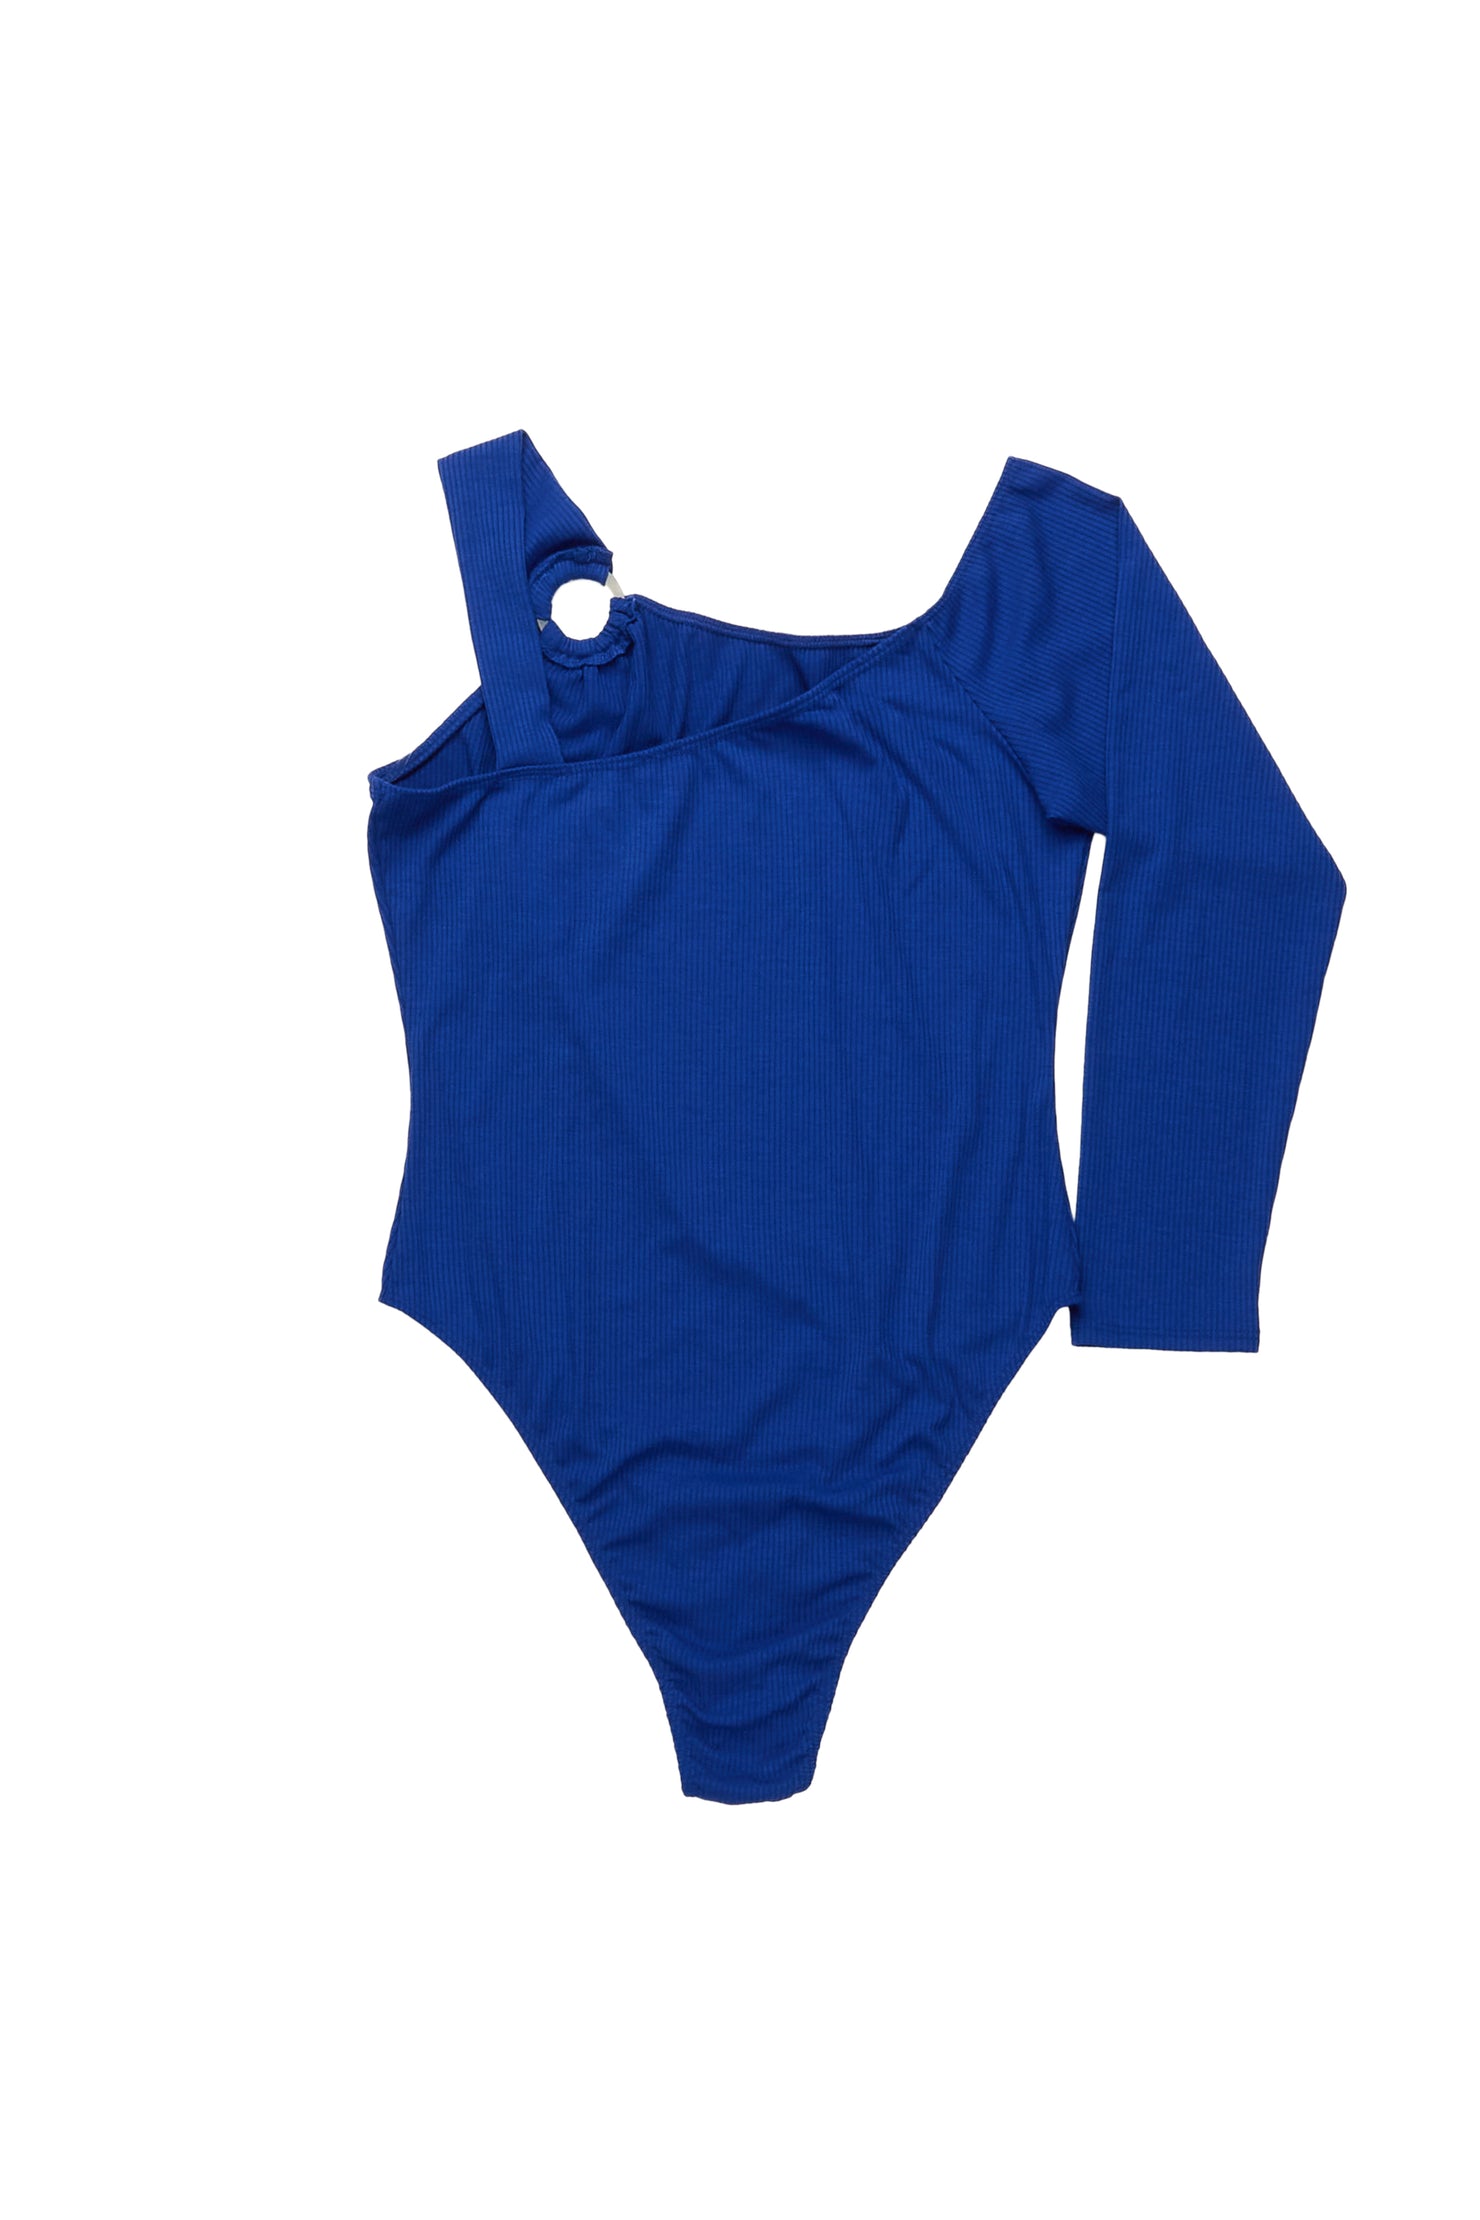 Kaley-C Bodysuit-Royal Blue